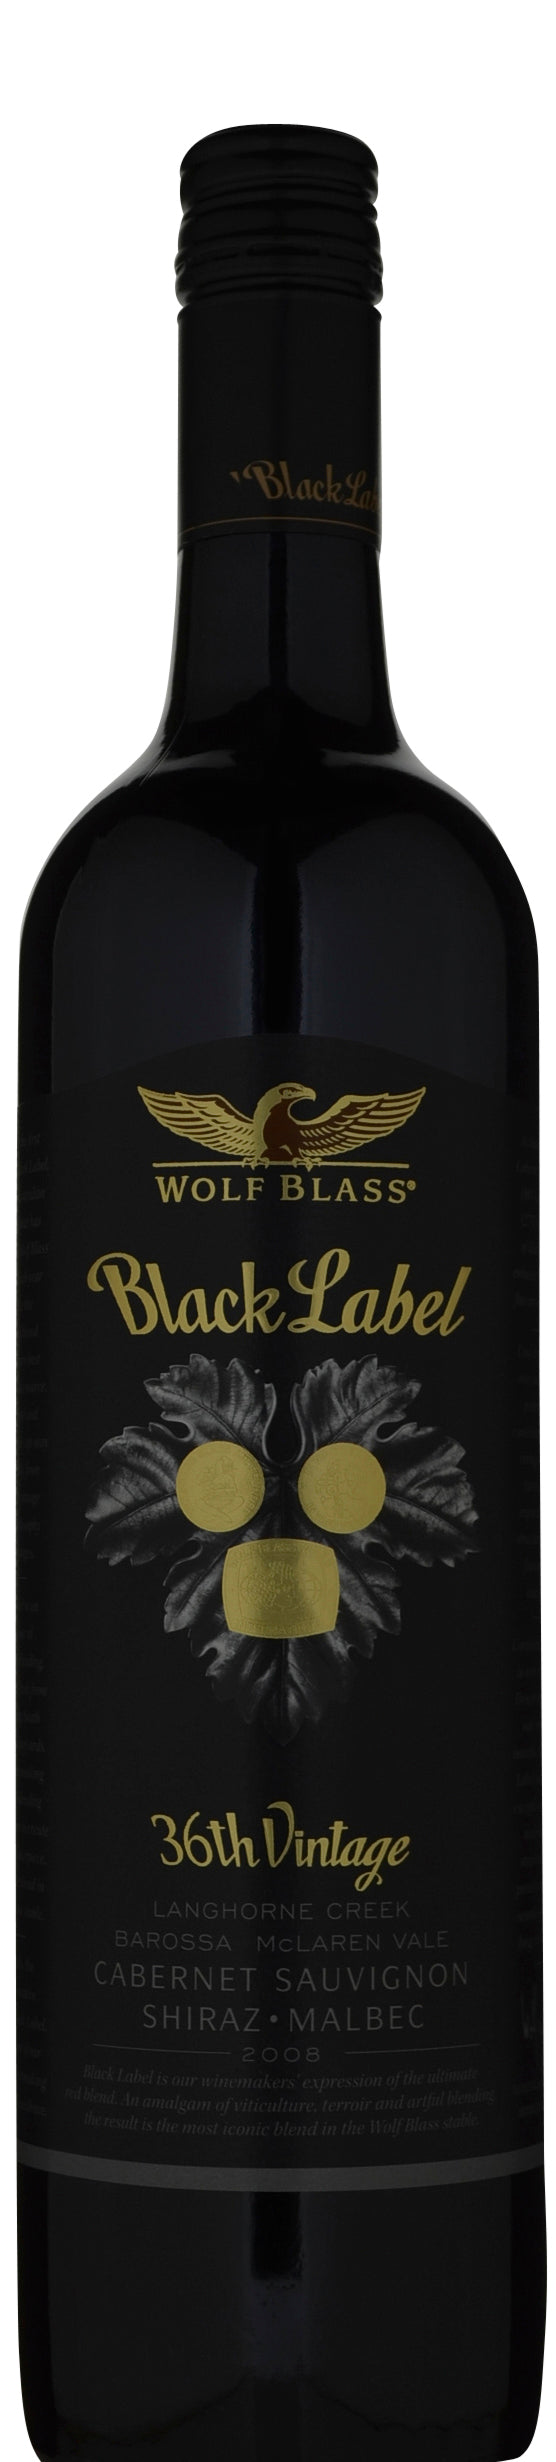 Wolf Blass Black Label Cabernet Shiraz Malbec 2008